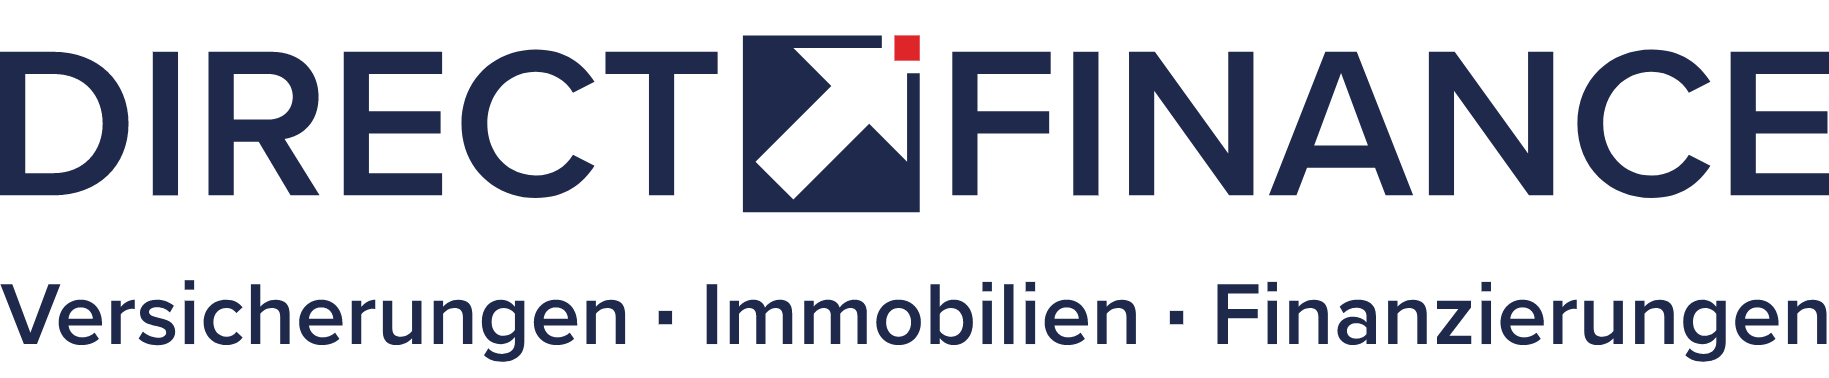 DIRECT FINANCE GmbH Logo